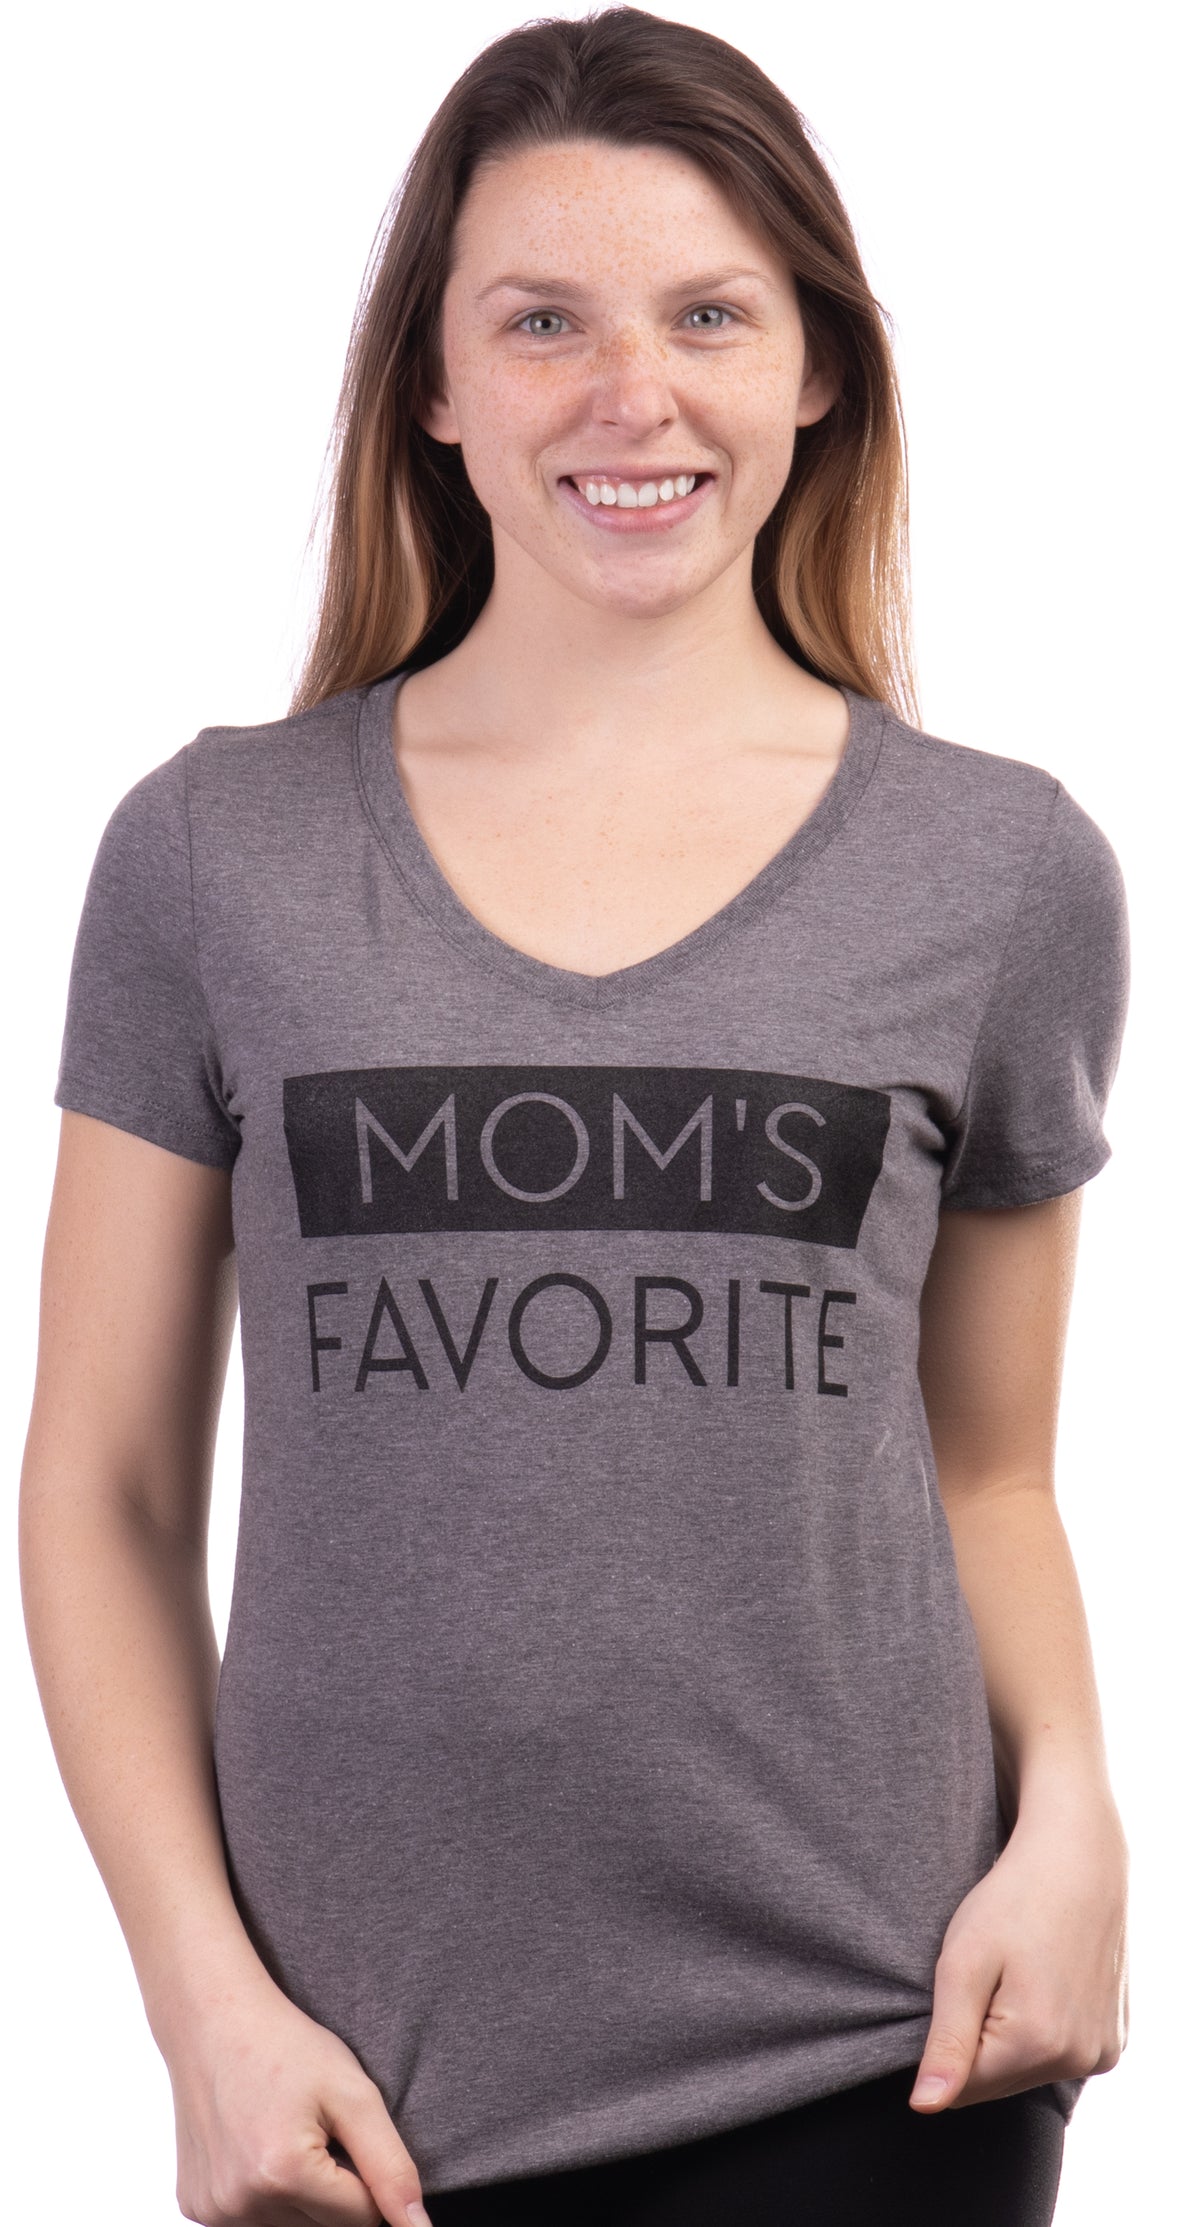 Mom's Favorite | Funny Daughter Sister Sibling Joke Mother's Day Holiday Family Humor T-Shirt for Women